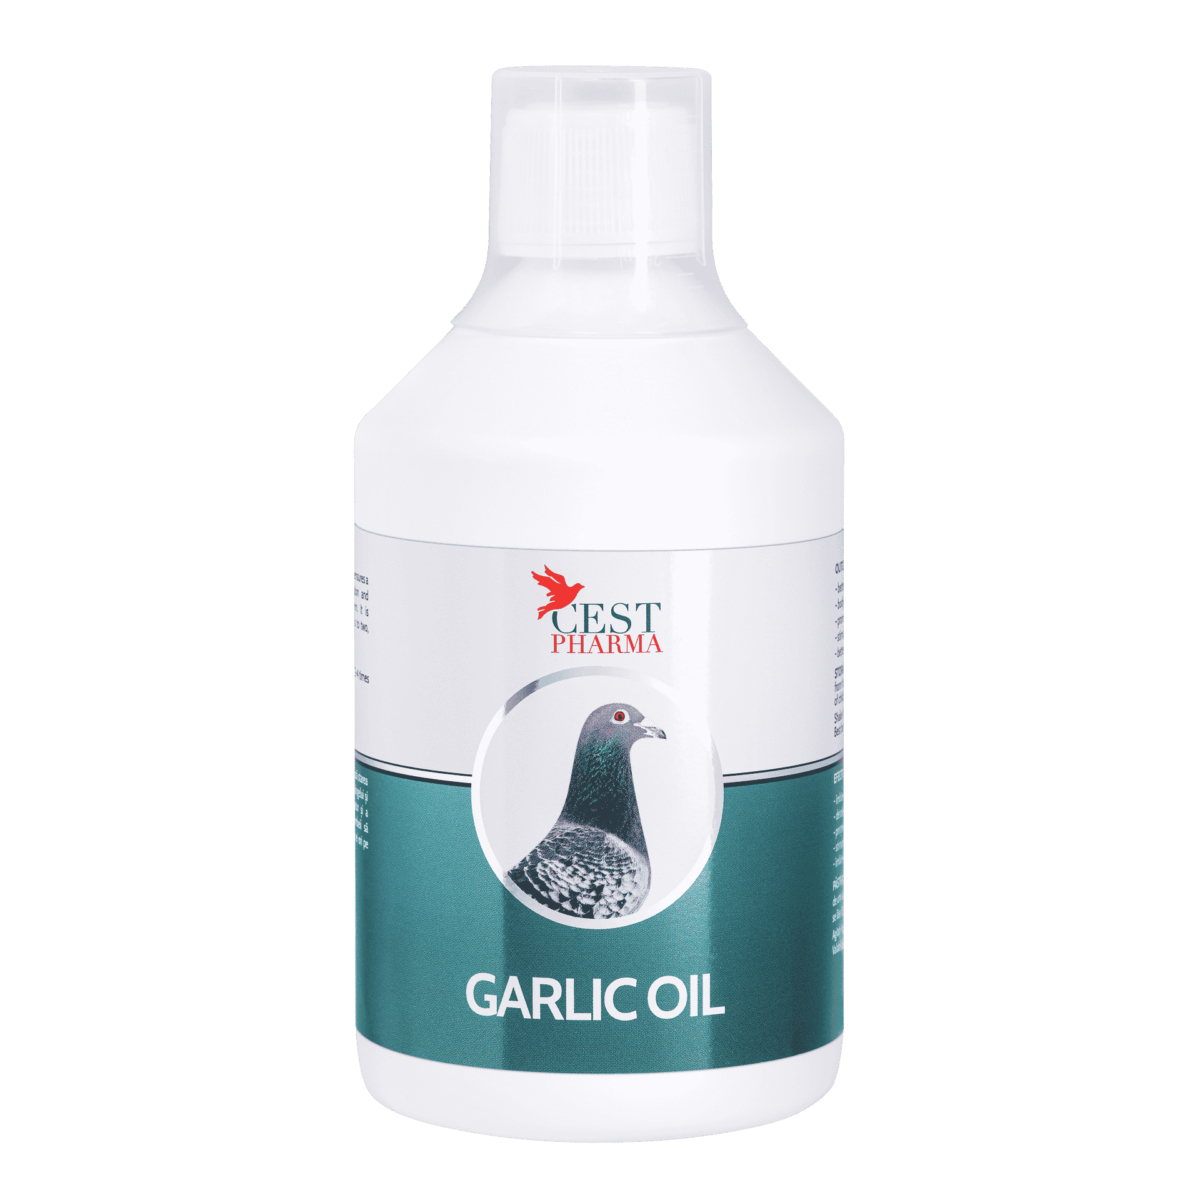 GARLIC OIL